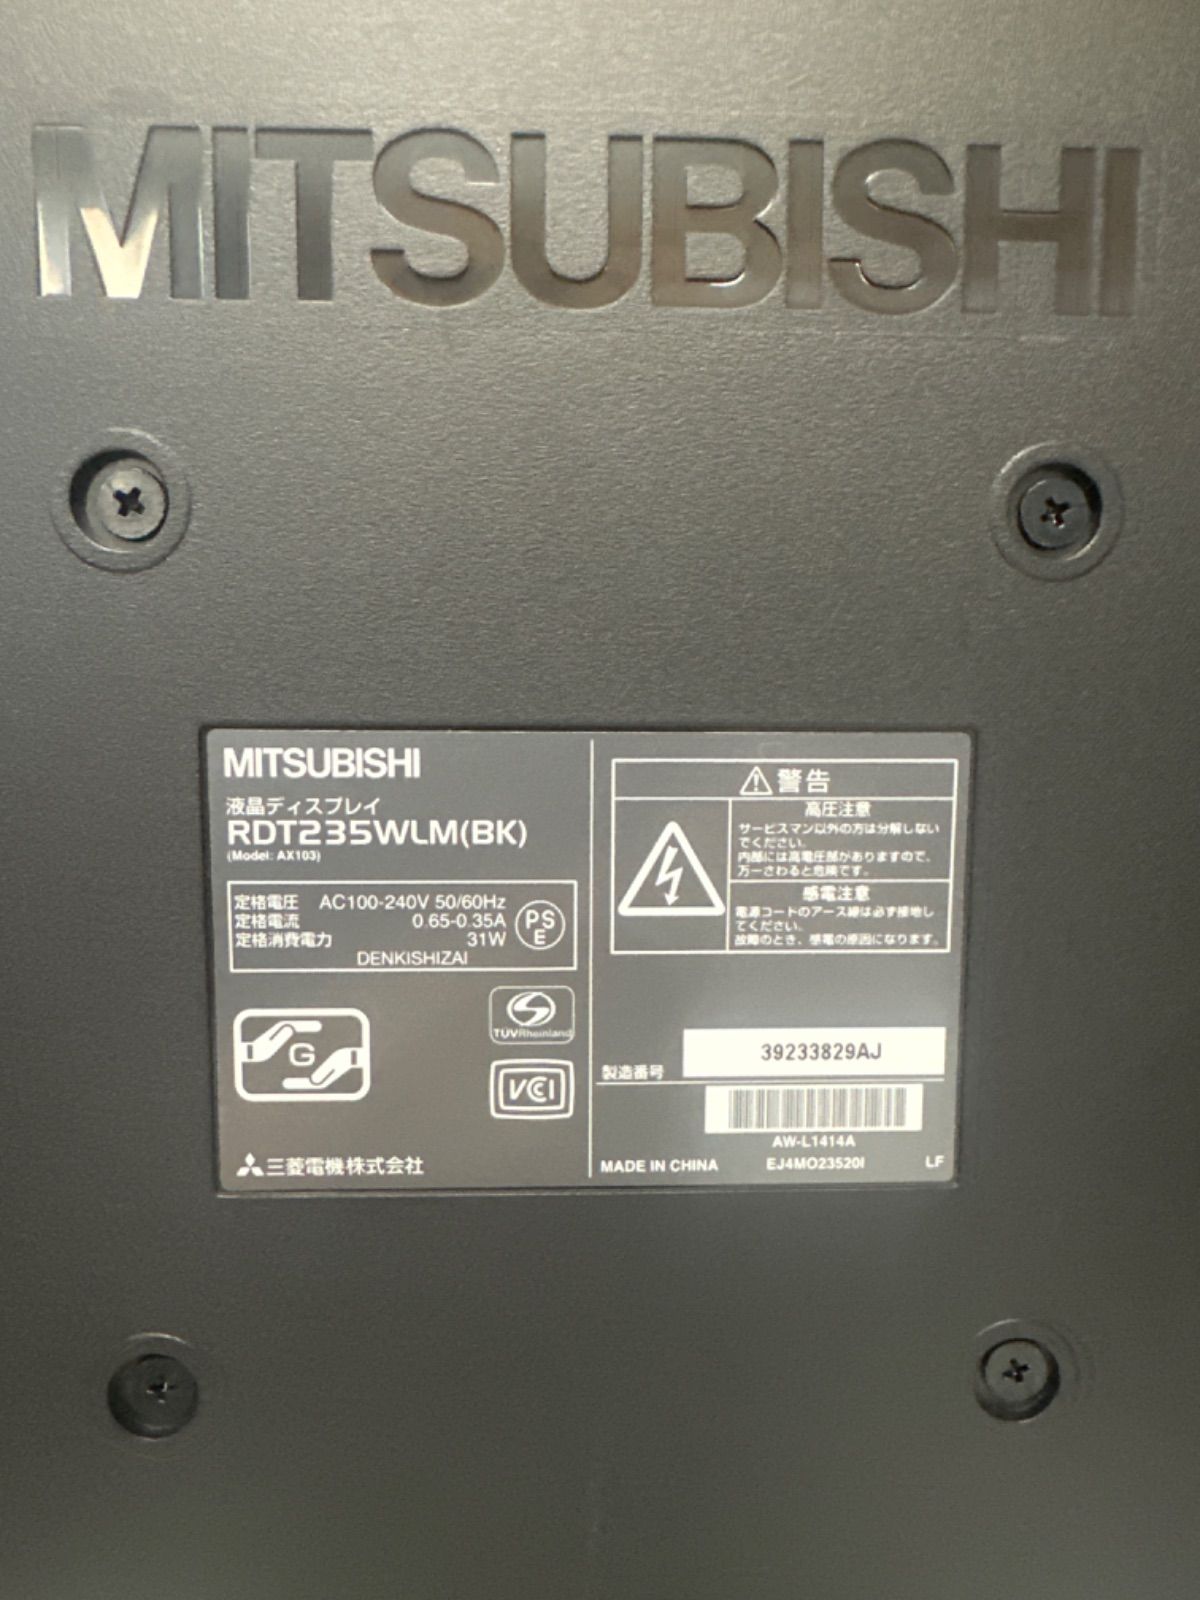 MITSUBISHI 23型ワイド液晶ディスプレイ(ノングレア) フルHD対応/ブラック RDT235WLM(BK) 中古-0619